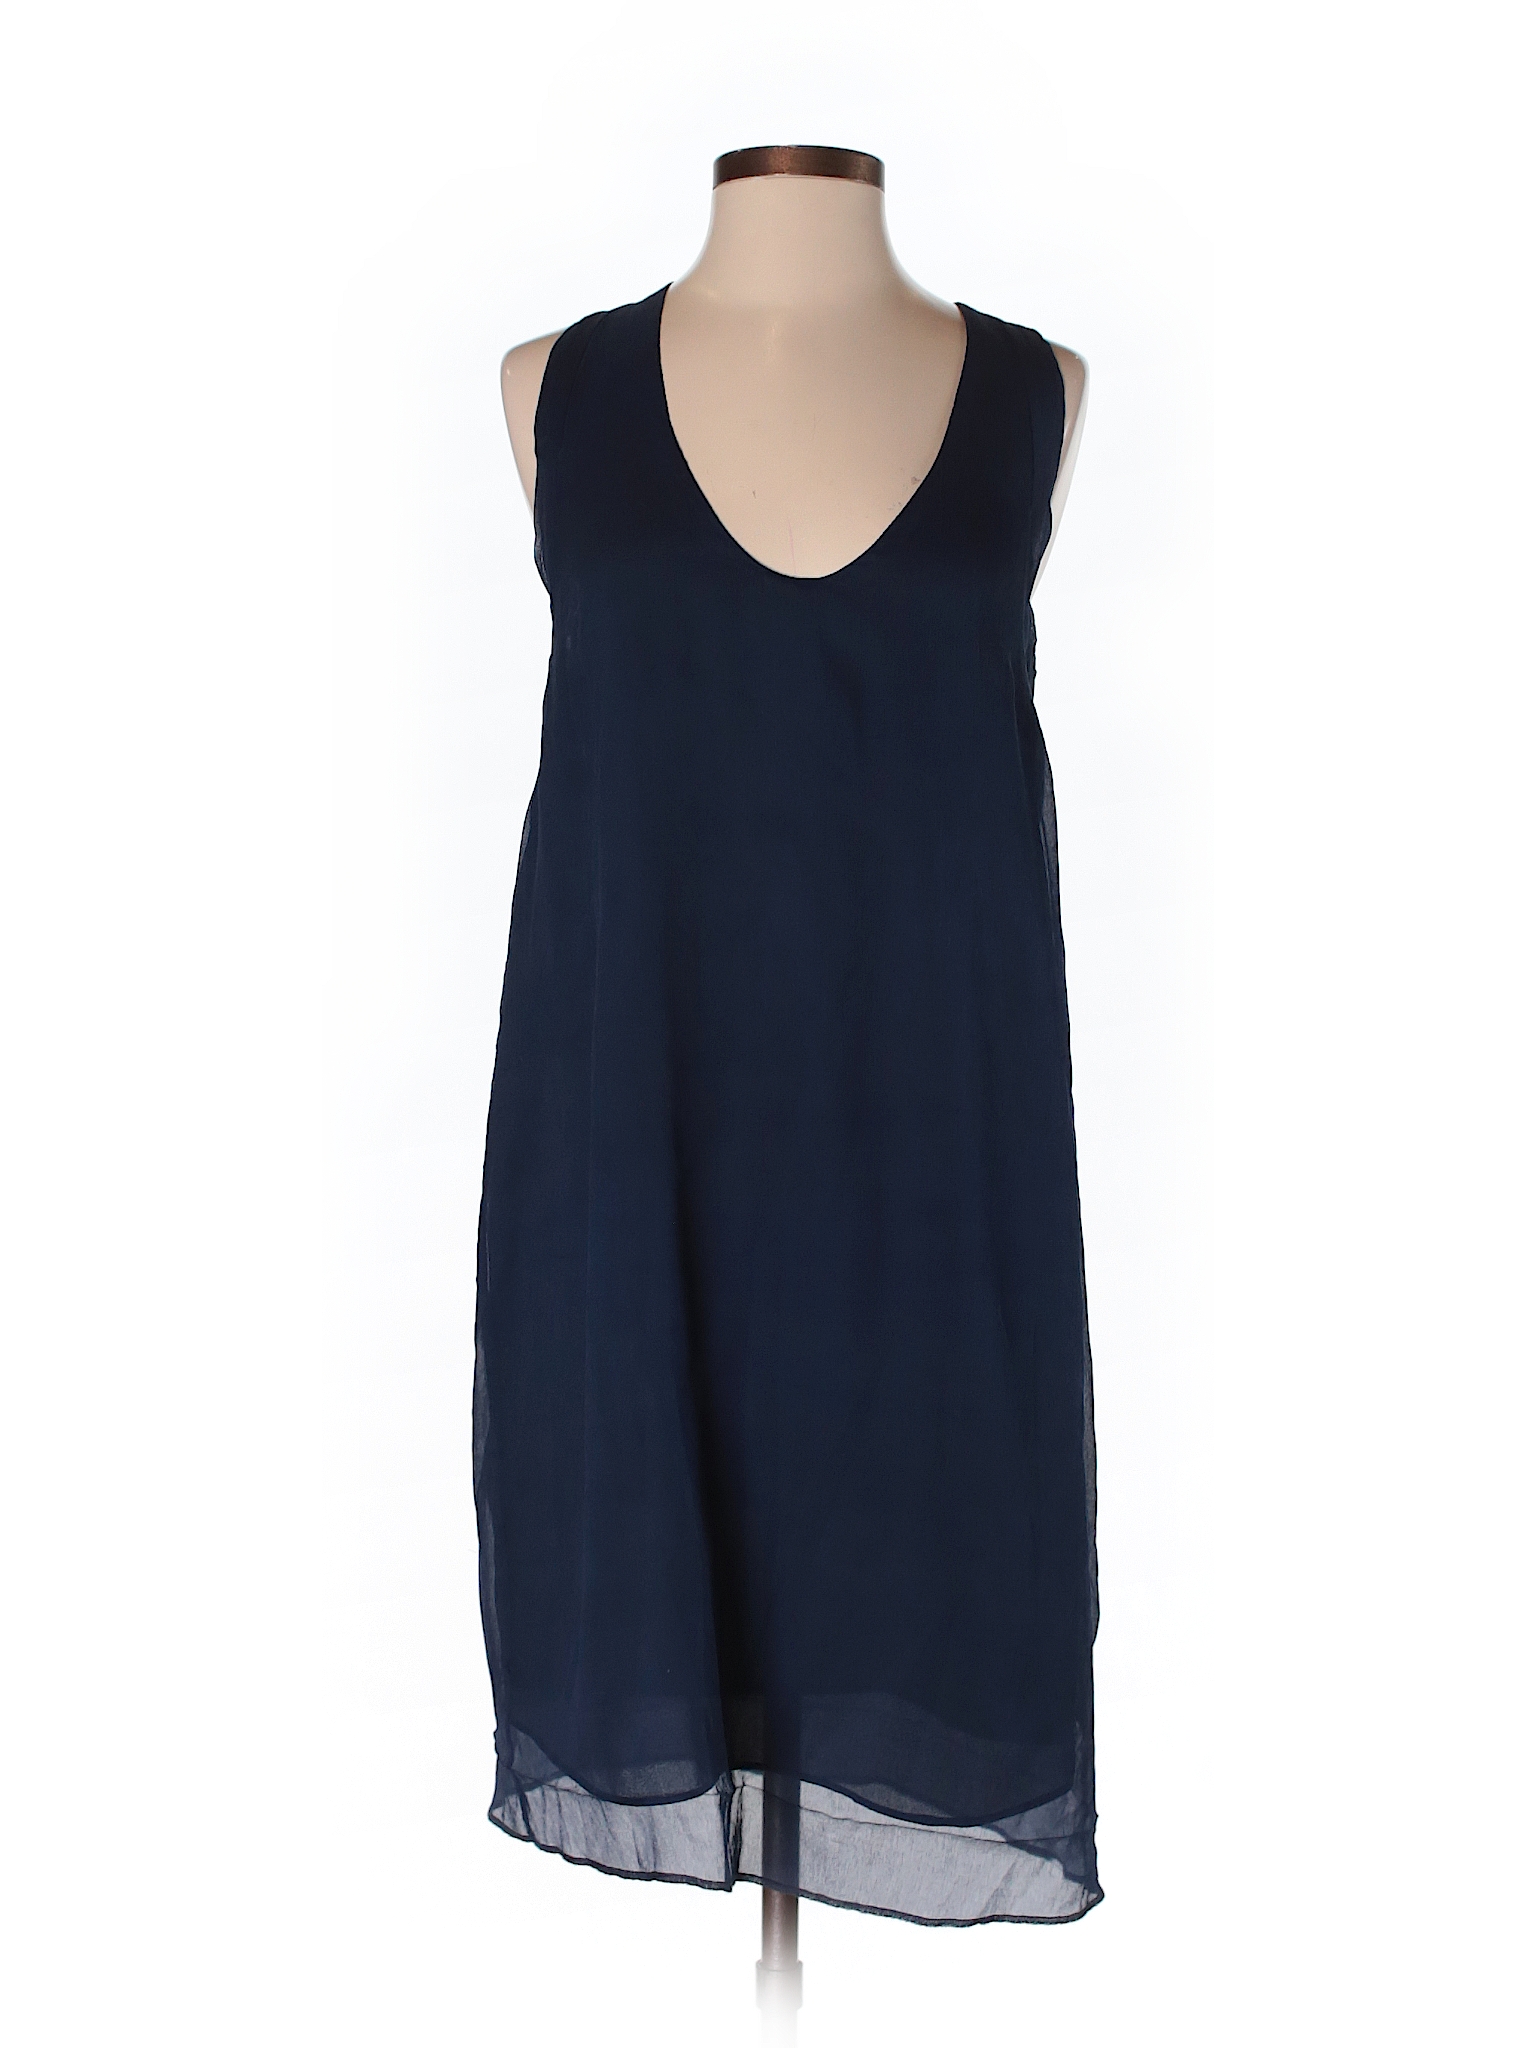 J. Crew 100% Silk Solid Dark Blue Casual Dress Size 2 - 77% off | thredUP